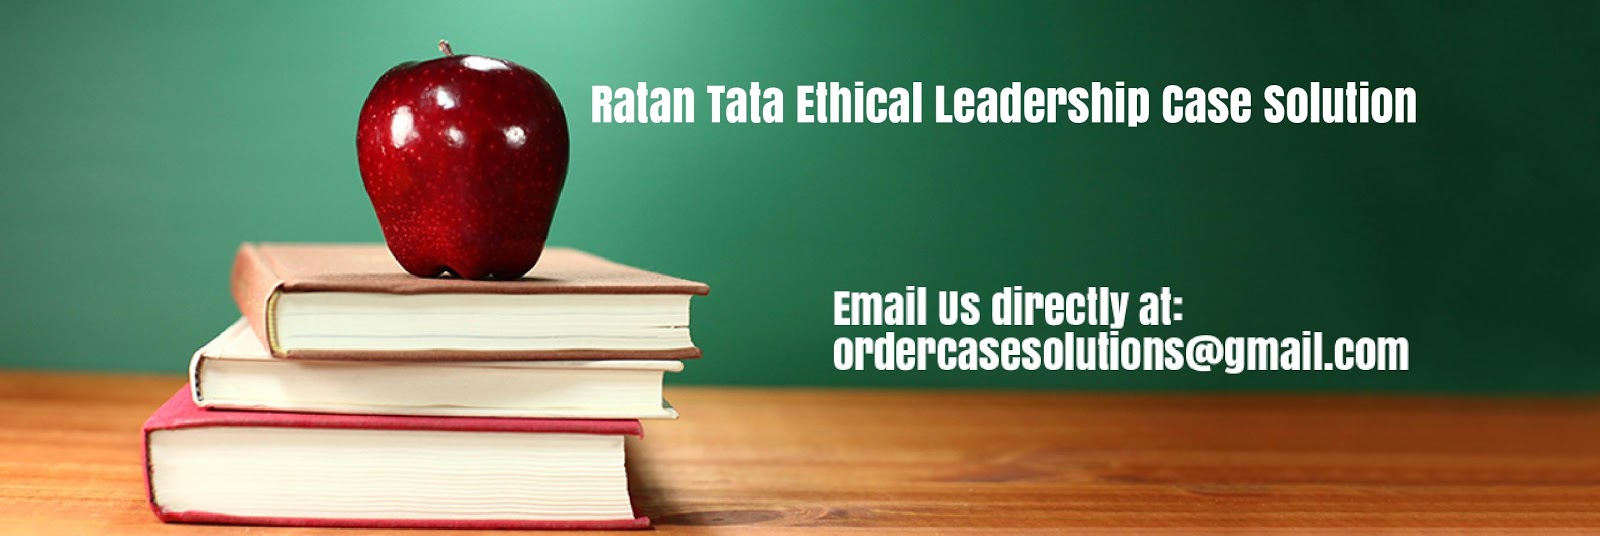 ratan tata ethical leadership case study